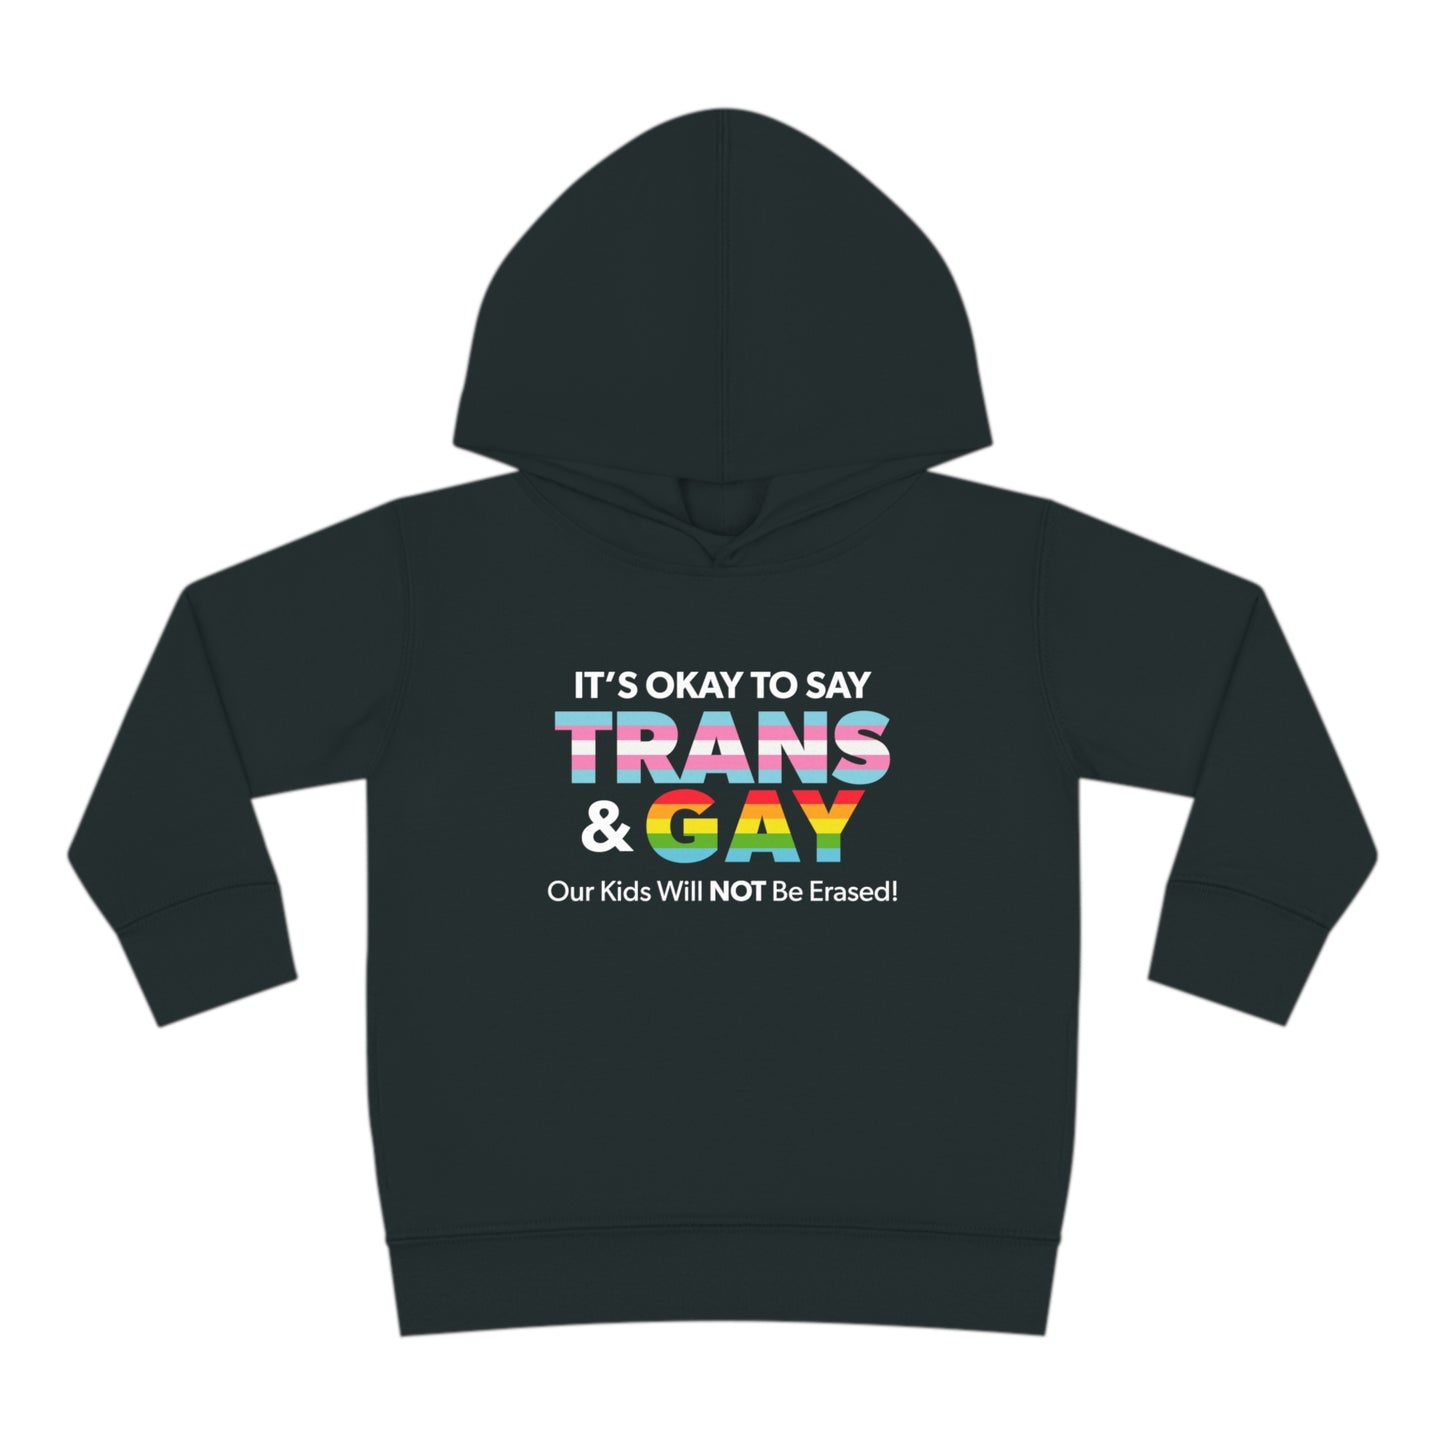 It’s Okay to Say Trans & Gay" Toddler Hoodie